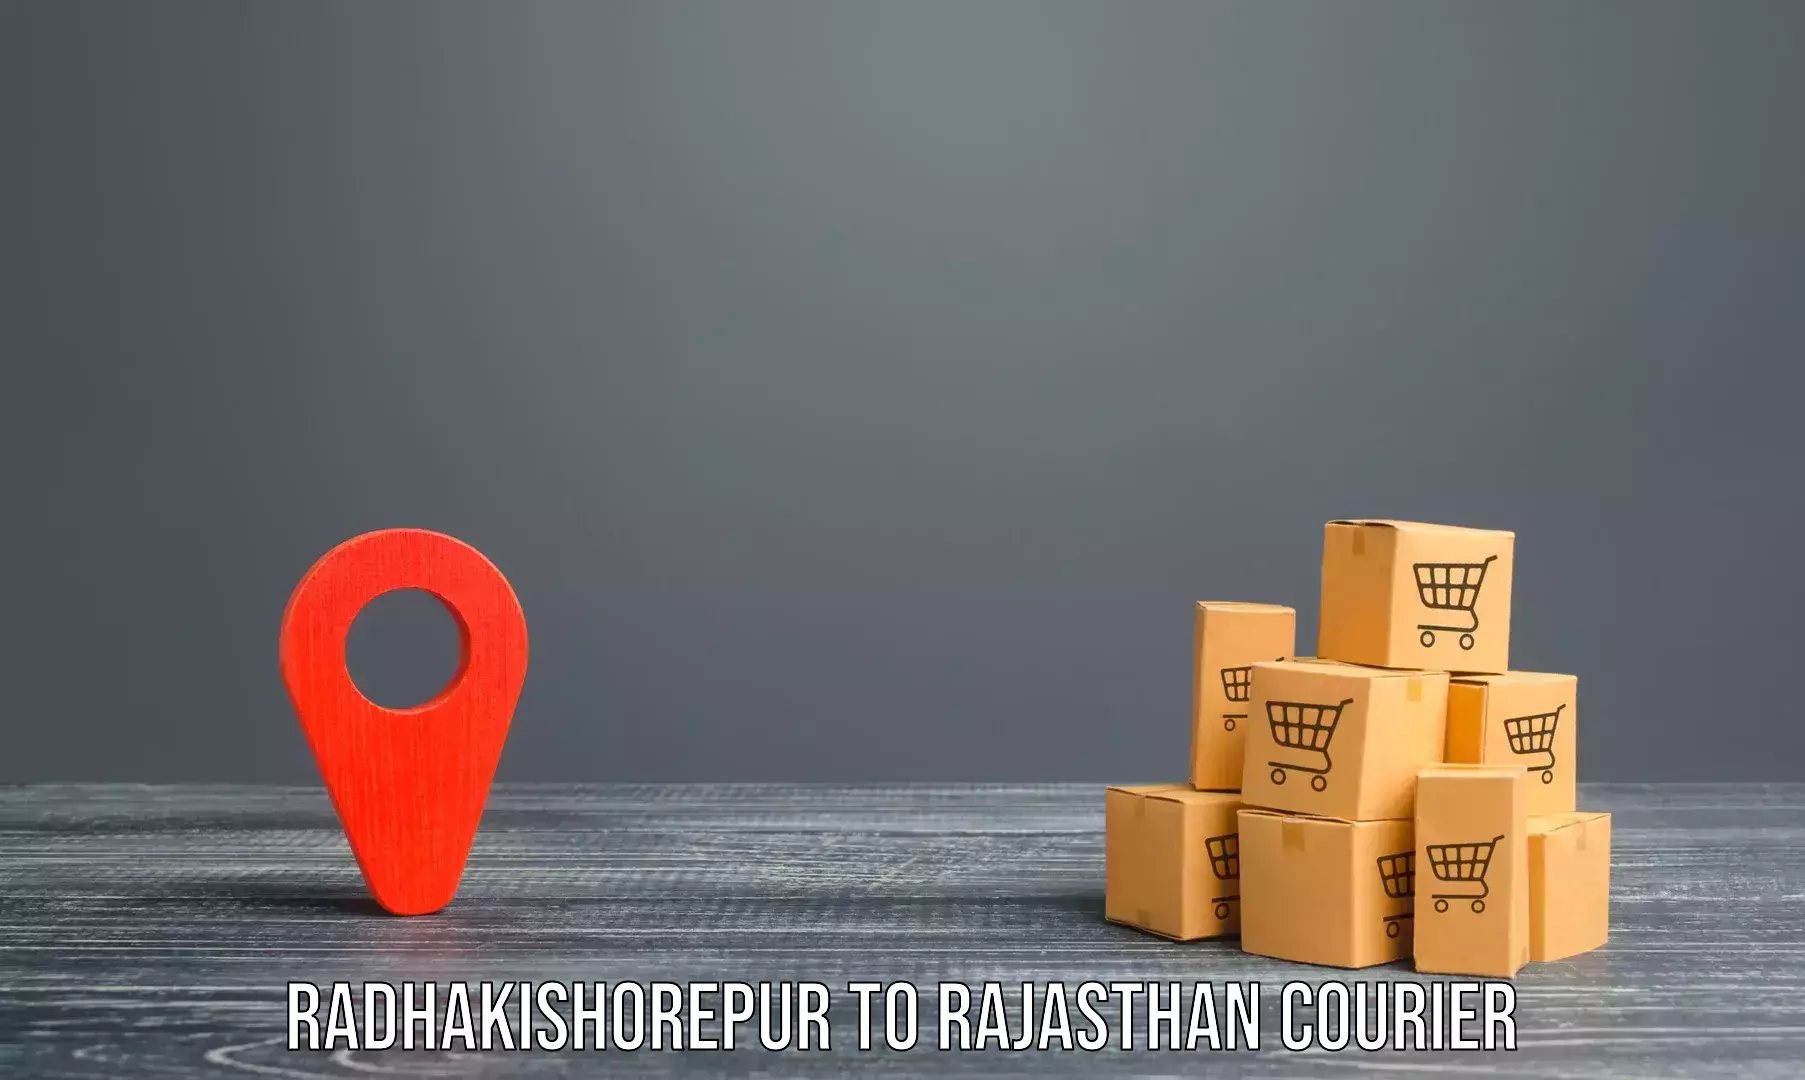 Home shifting experts Radhakishorepur to Pilani